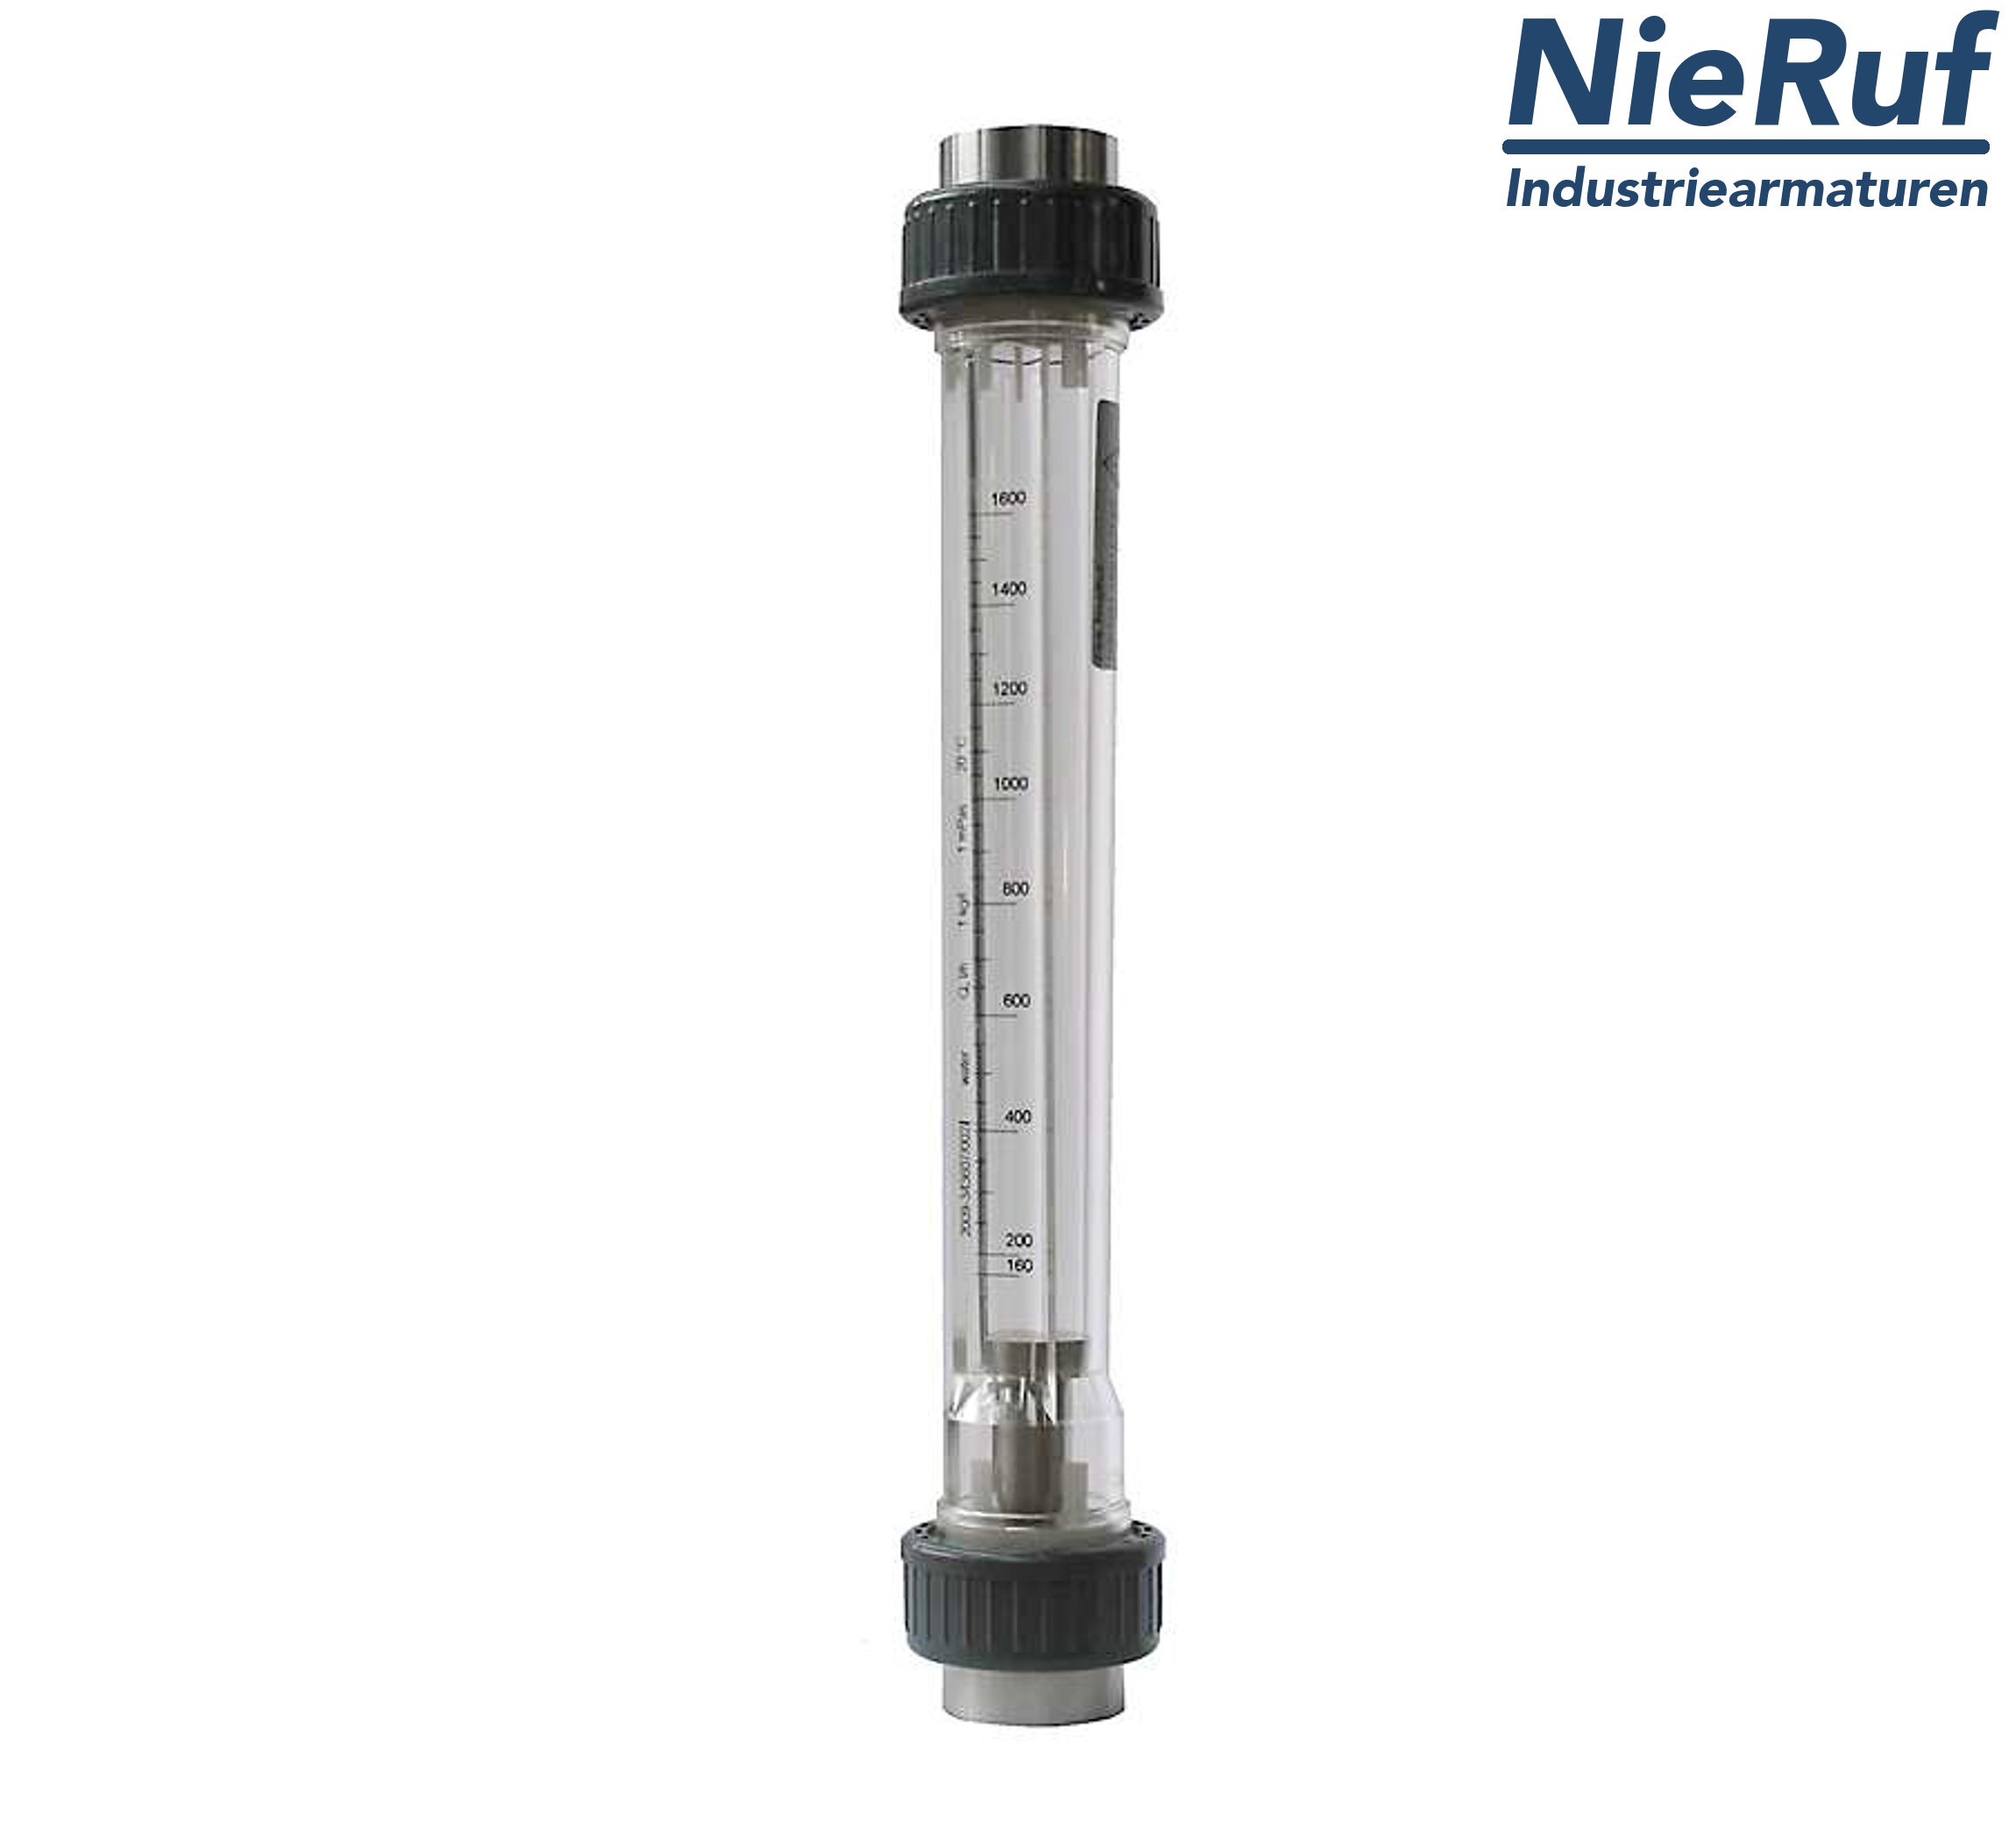 Variable area flowmeter 1" inch NPT 100.0 - 1000 l/h water FKM